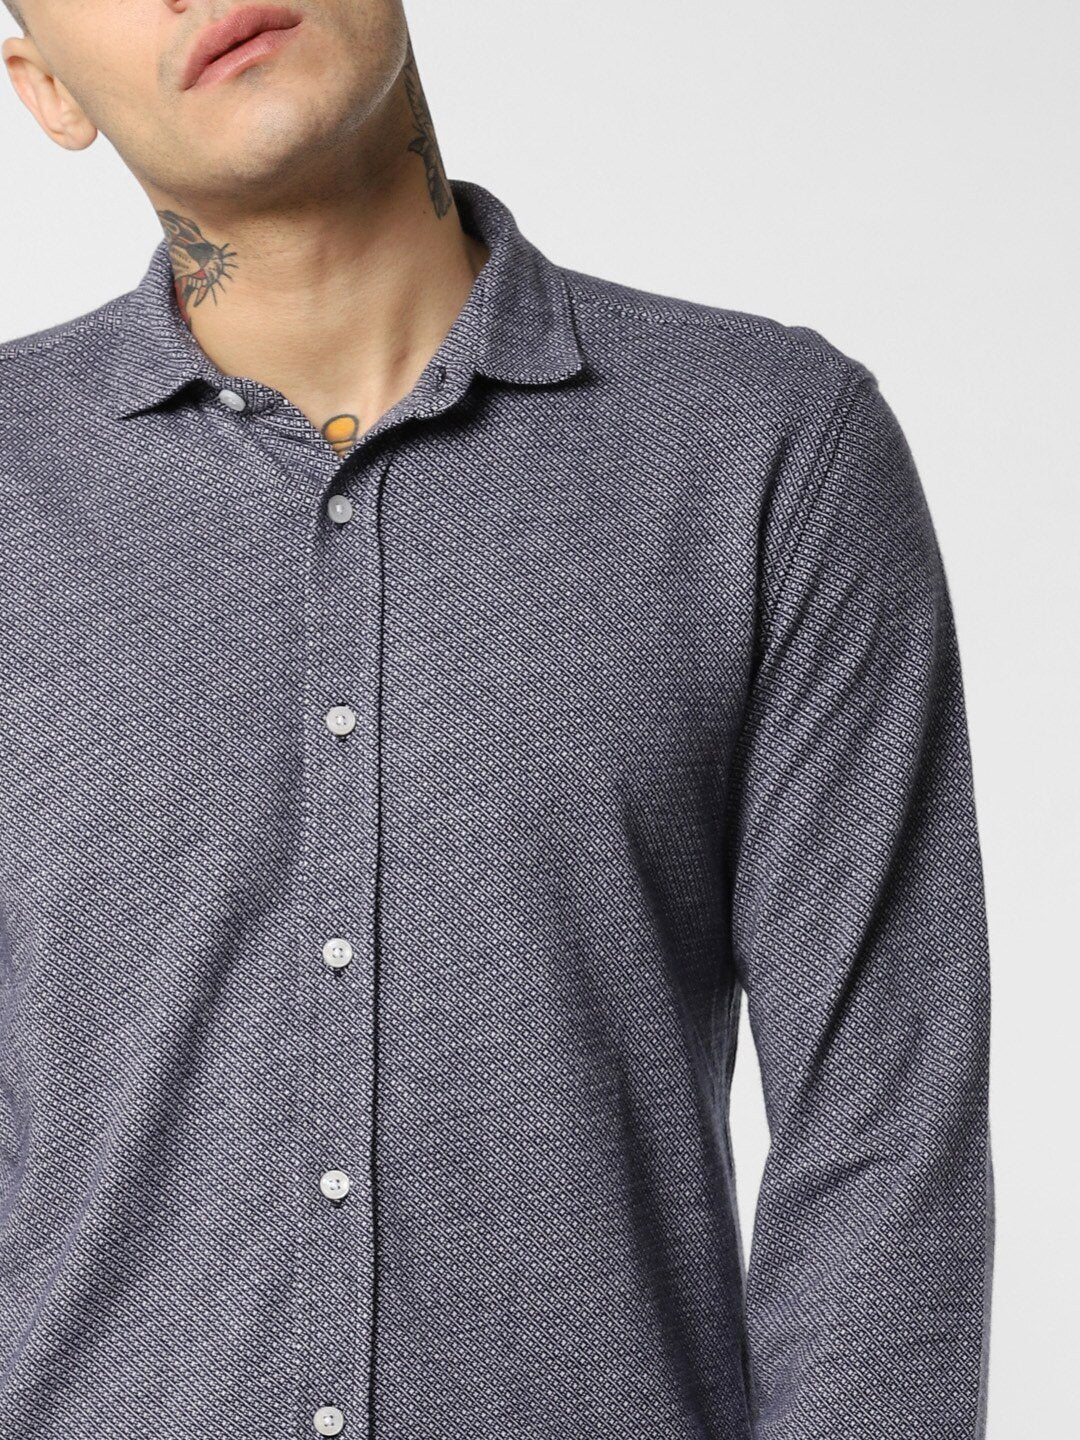 Men Navy Blue & White Slim Fit Self Design Casual Shirt-2080059002 - Discount Store